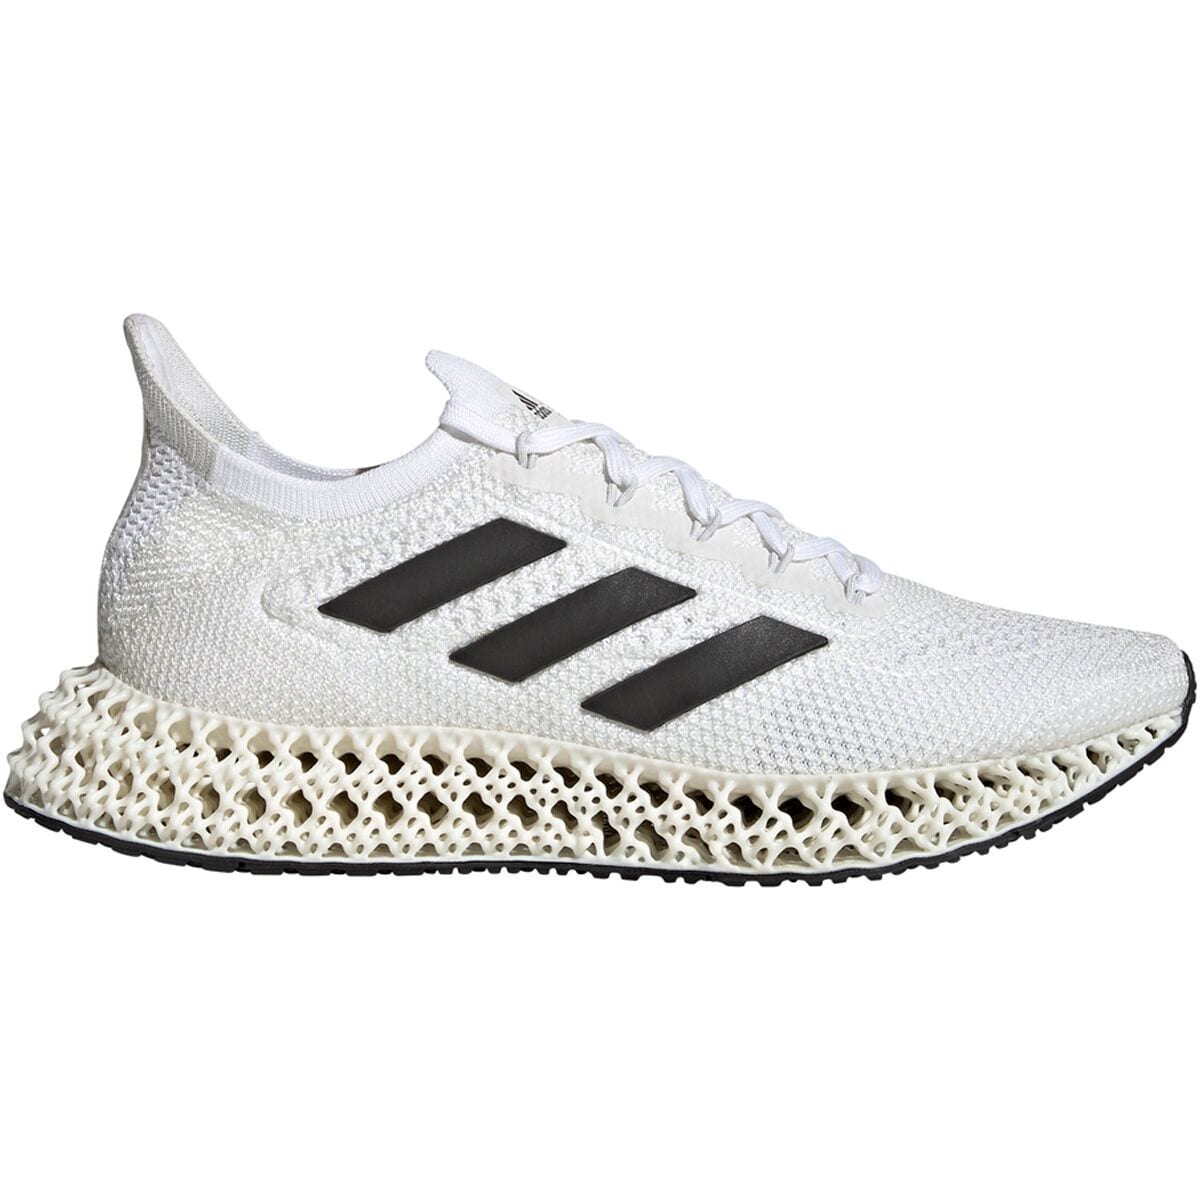 Adidas 4DFWD Running Shoe - Men's